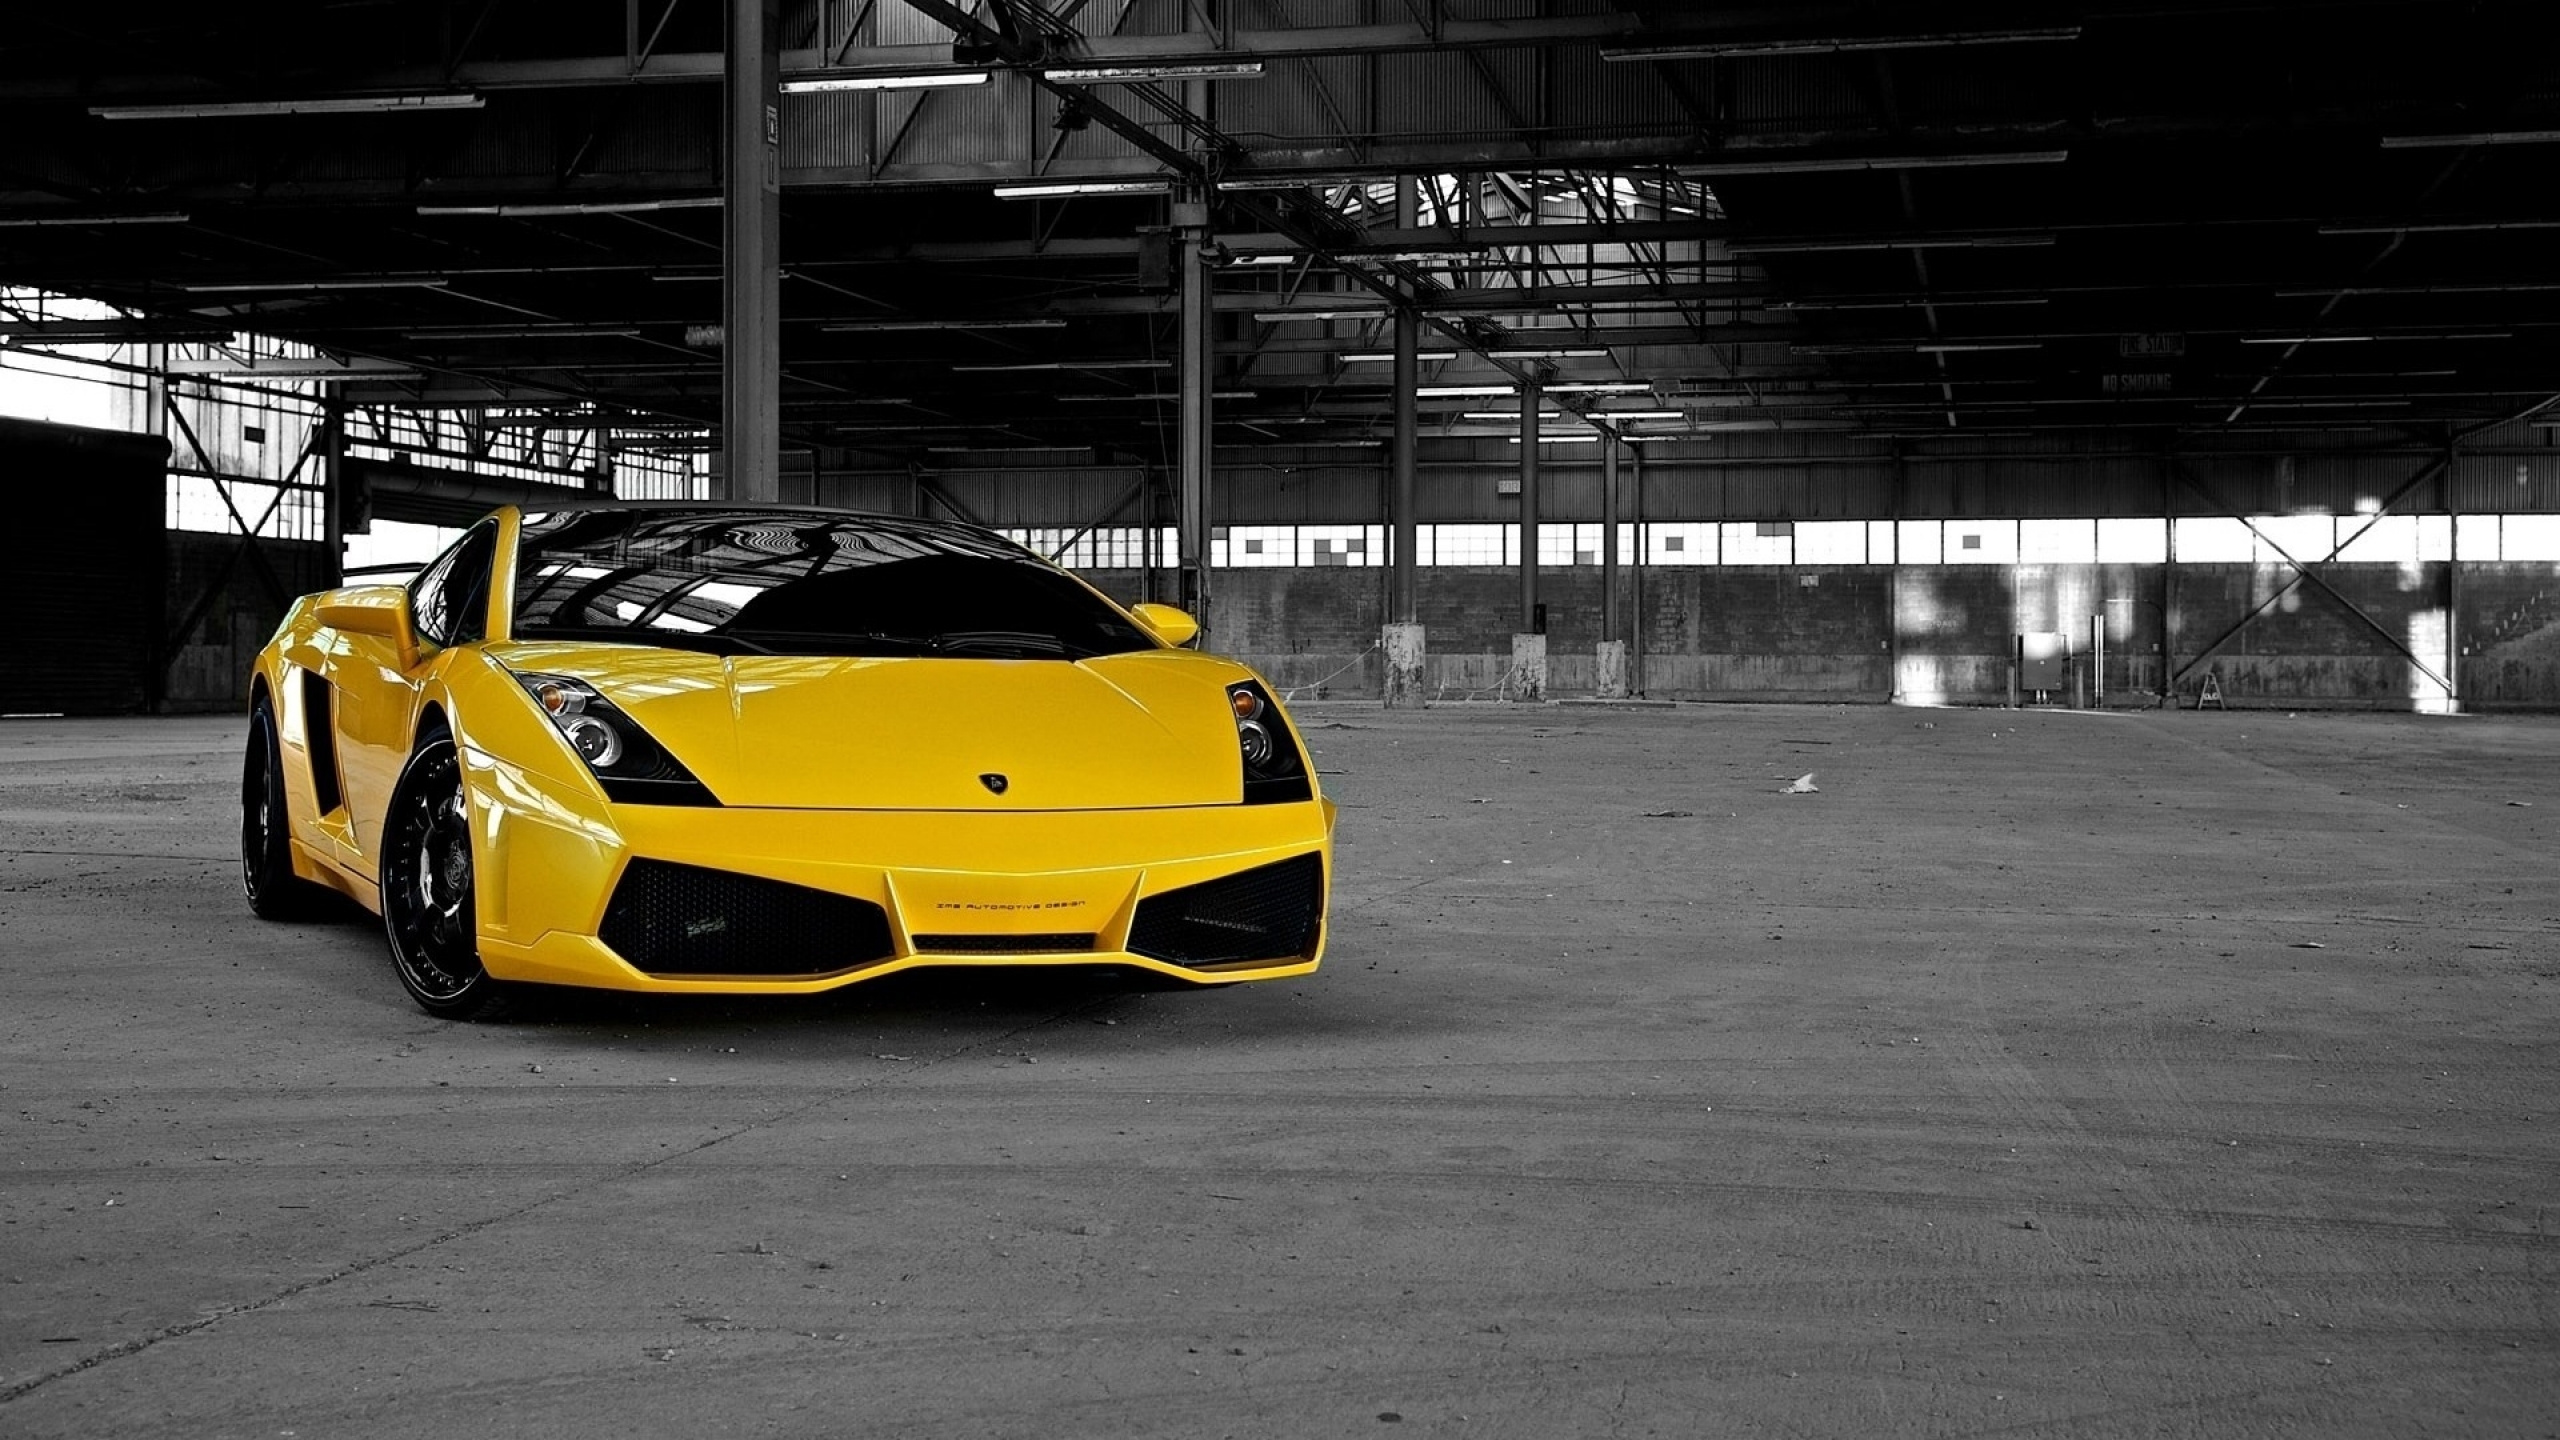 Gelber Lamborghini Aventador Auf Dem Parkplatz Geparkt. Wallpaper in 2560x1440 Resolution